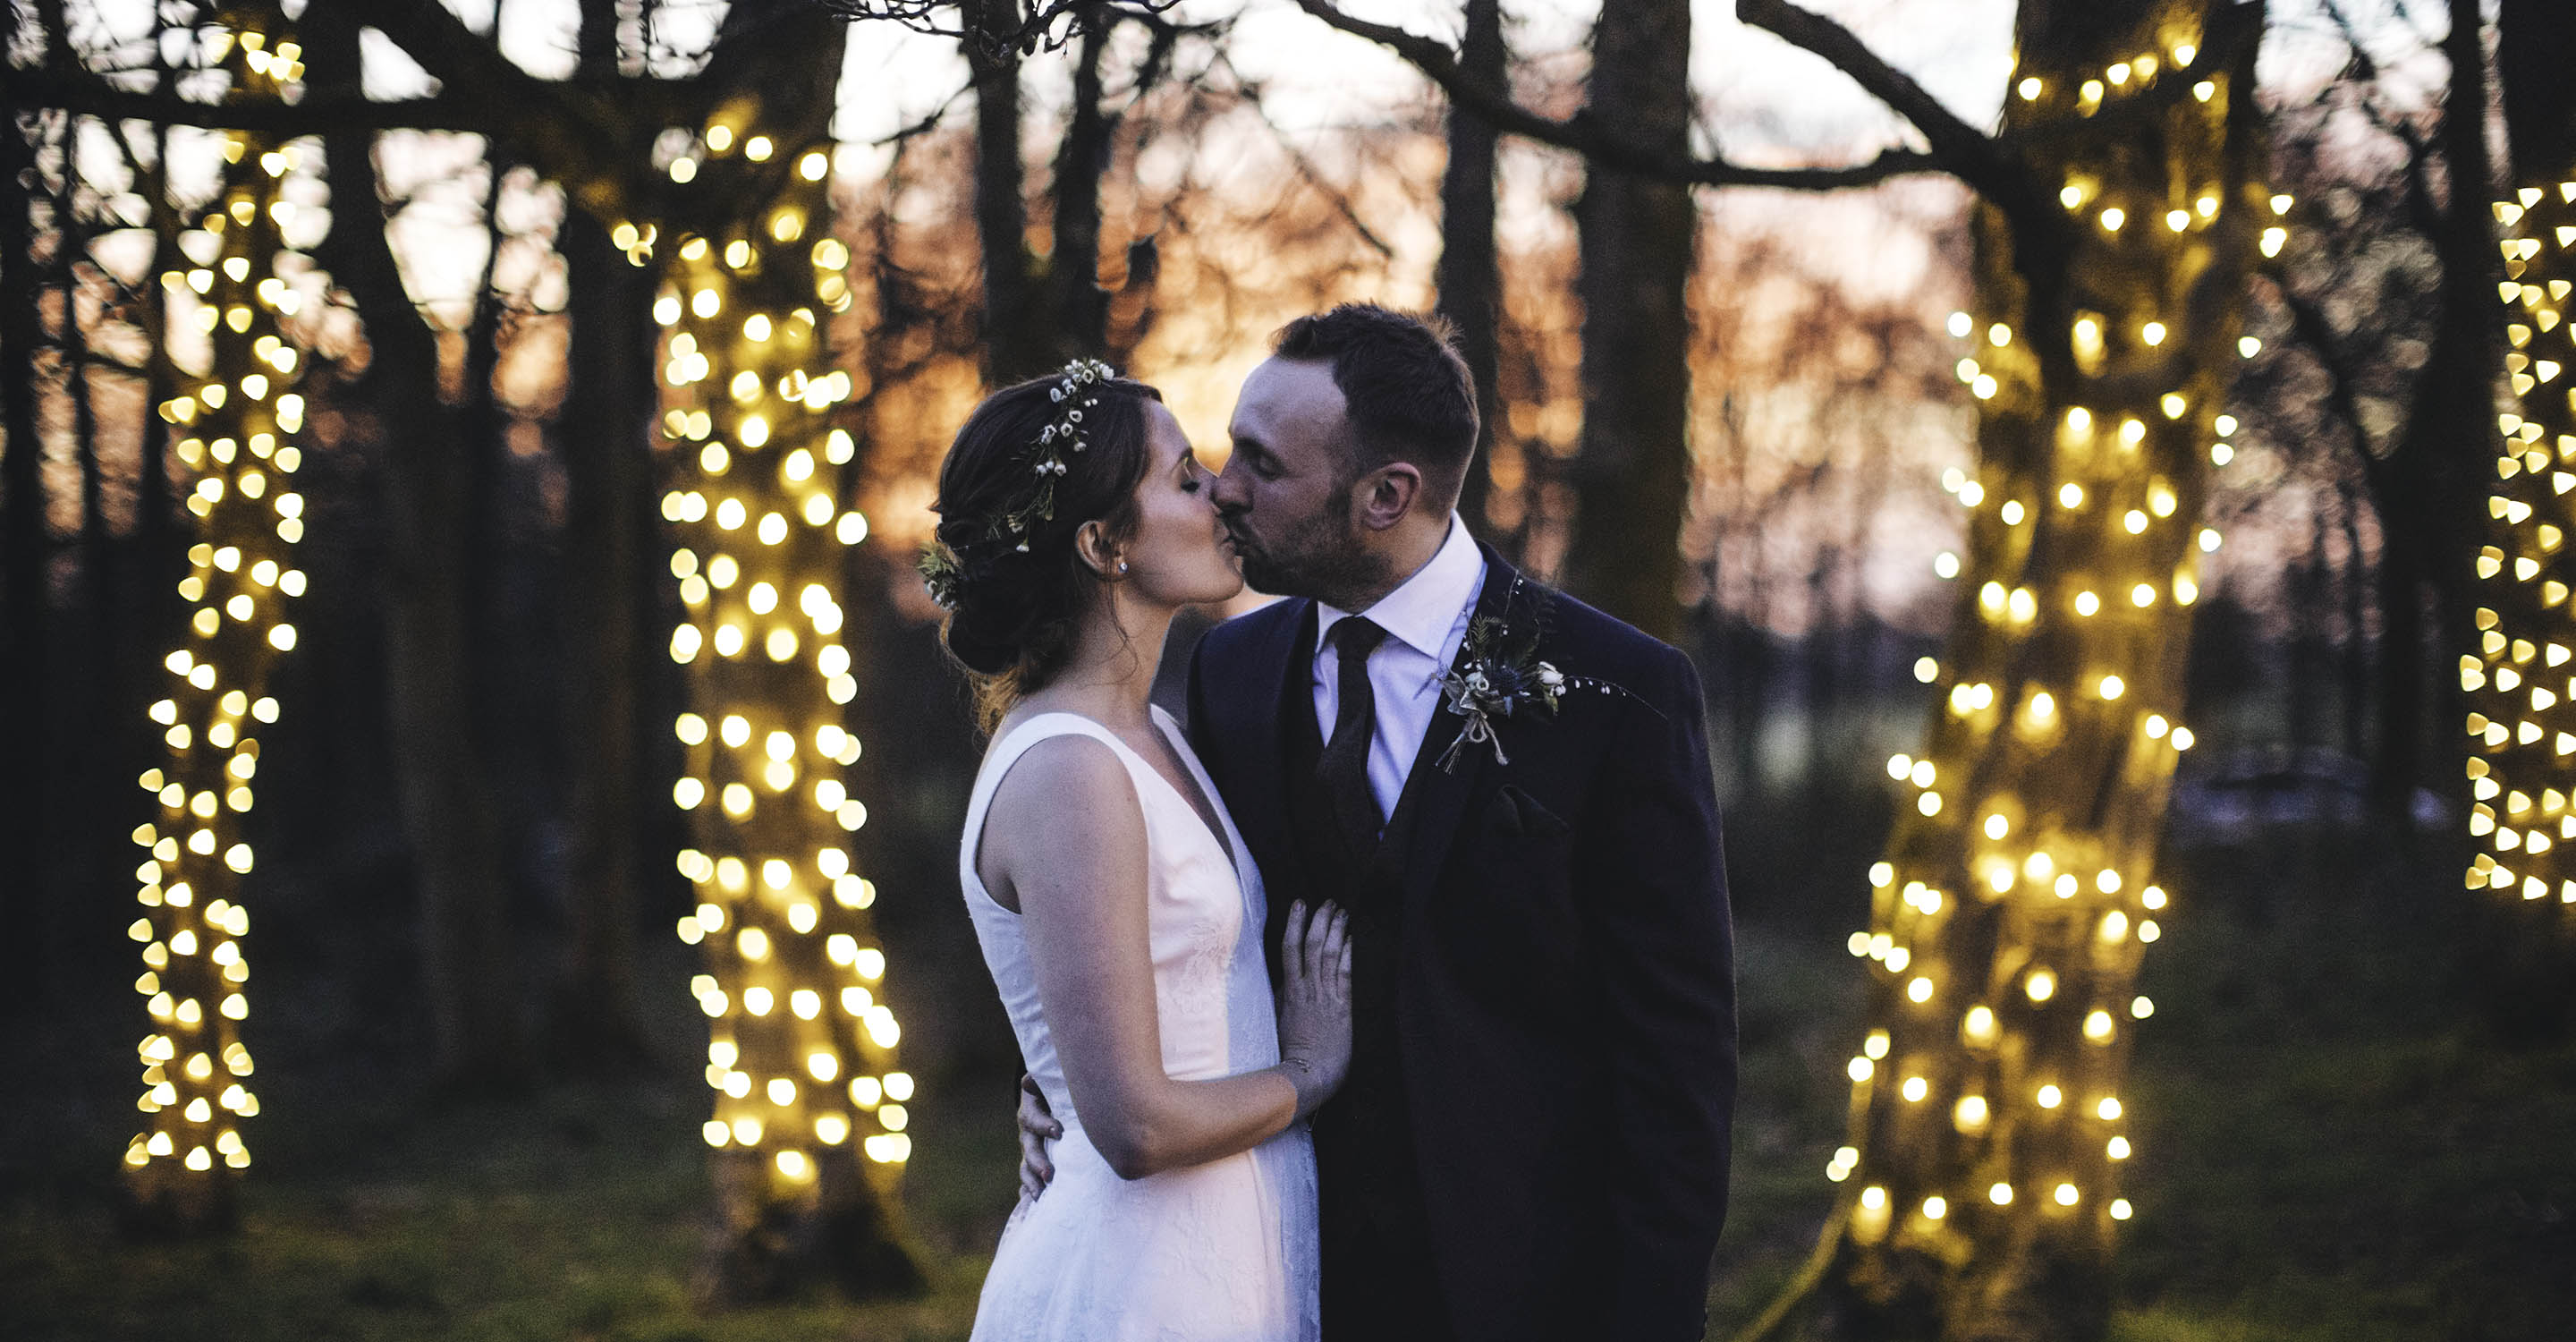 Bride and Groom kiss Woodland Fairylights trees Sunset